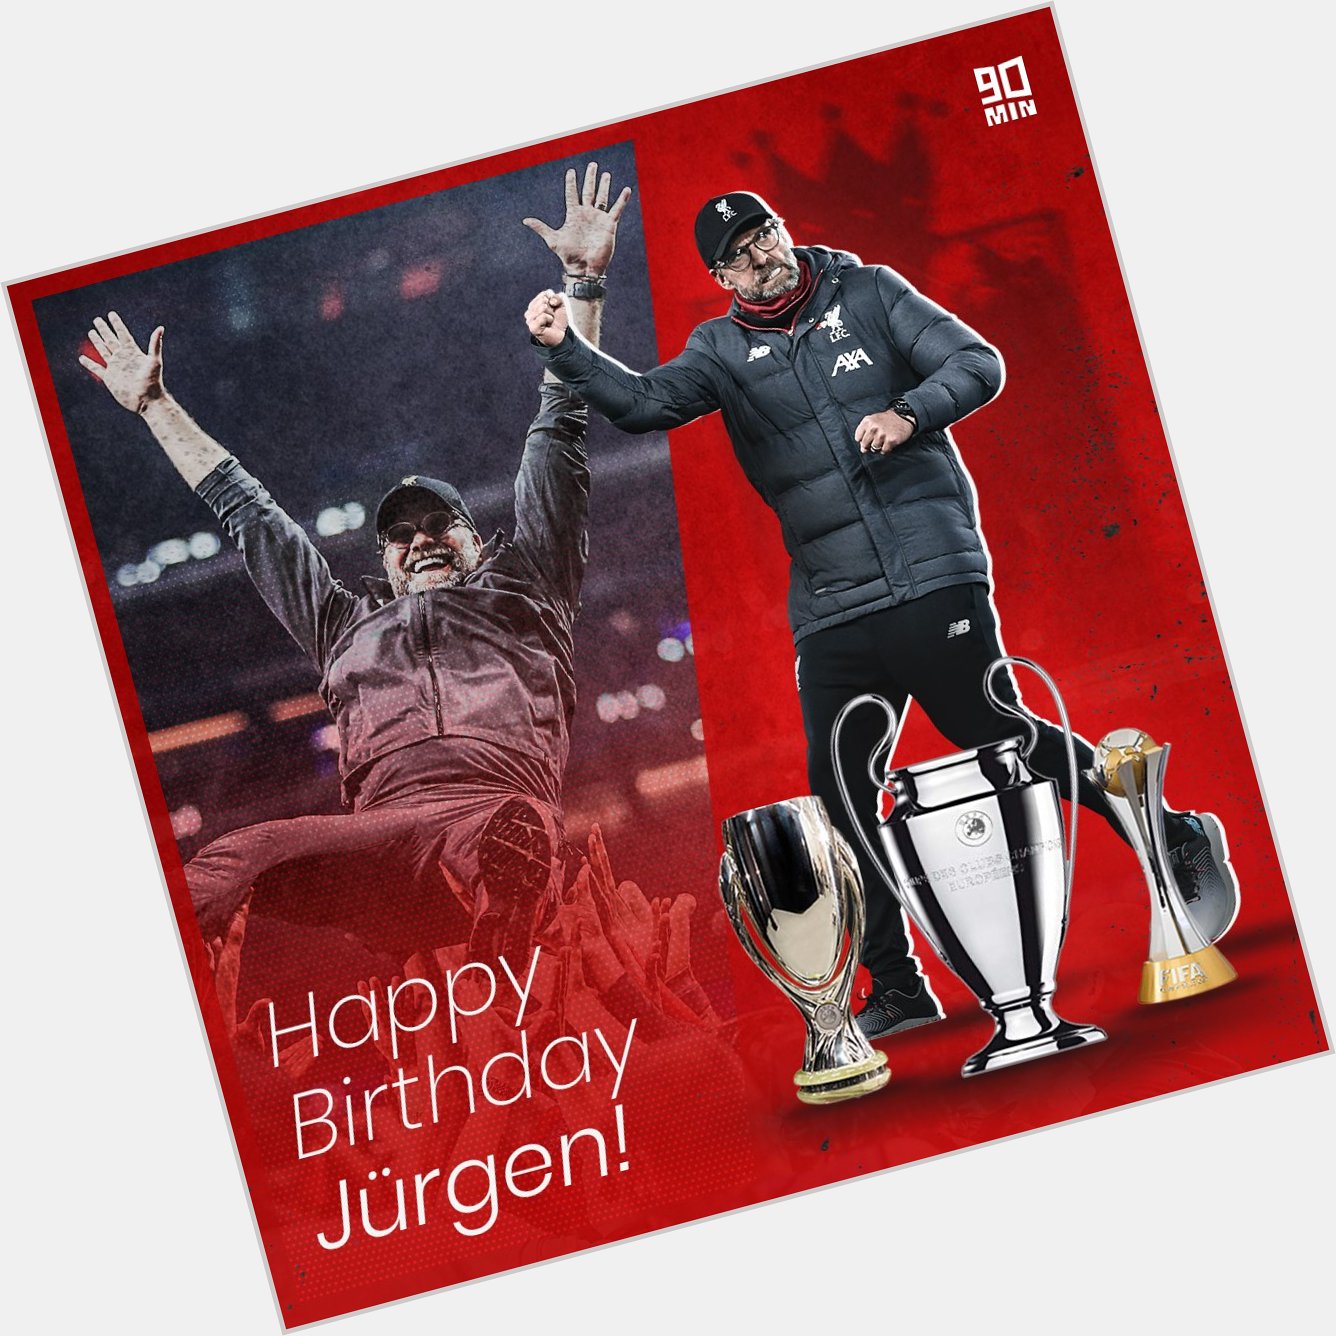 Happy birthday to Jurgen Klopp!

The man who\s bringing the glory days back to Liverpool. 